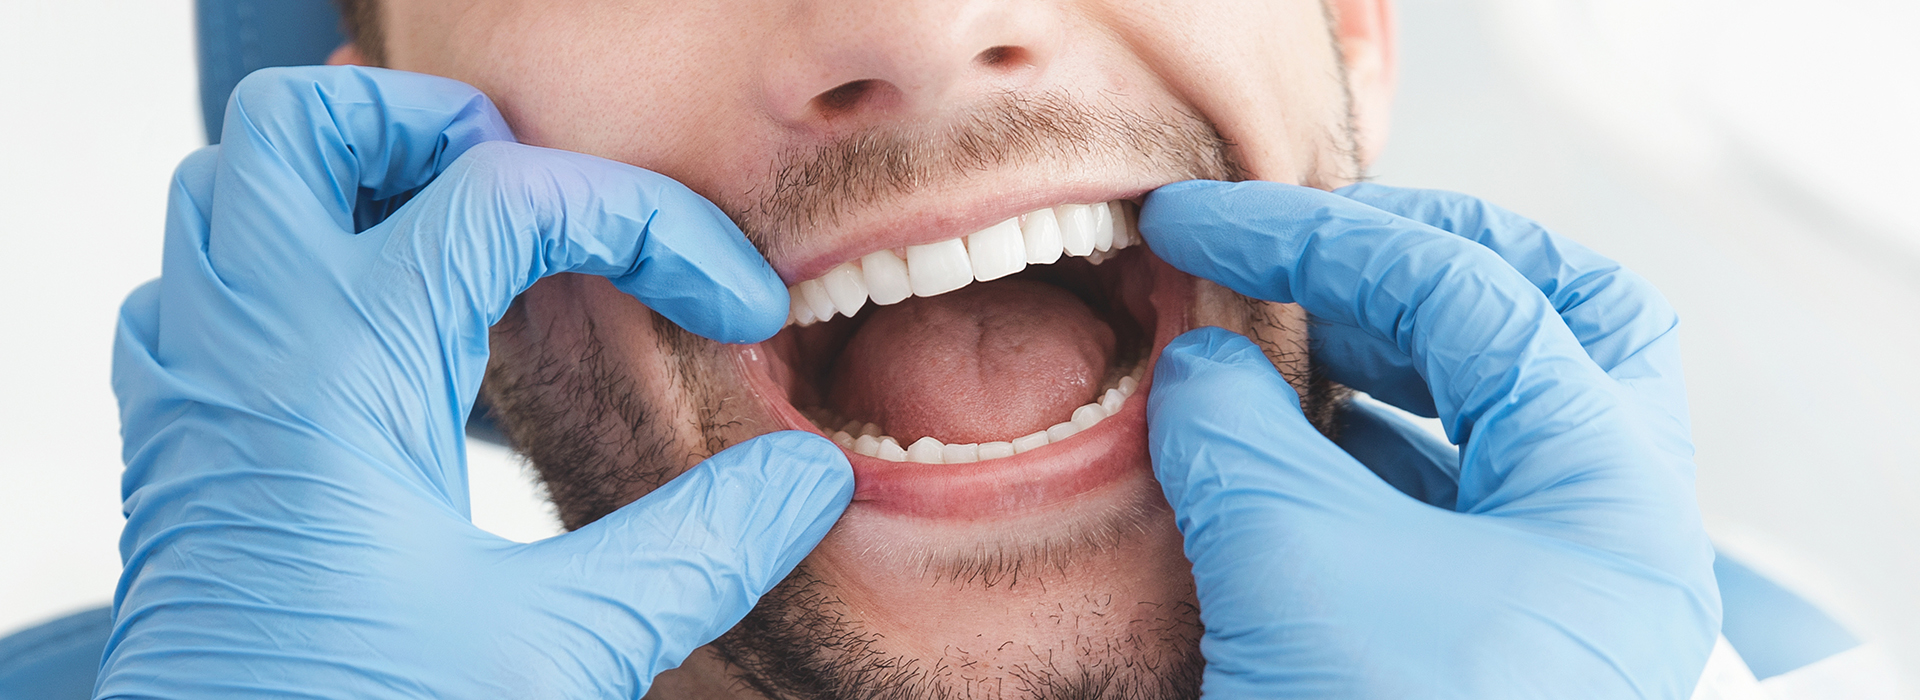 Steven R. Feigelson, DDS | Bridges   Dentures, Gum Treatment and Pediatric Dental Care